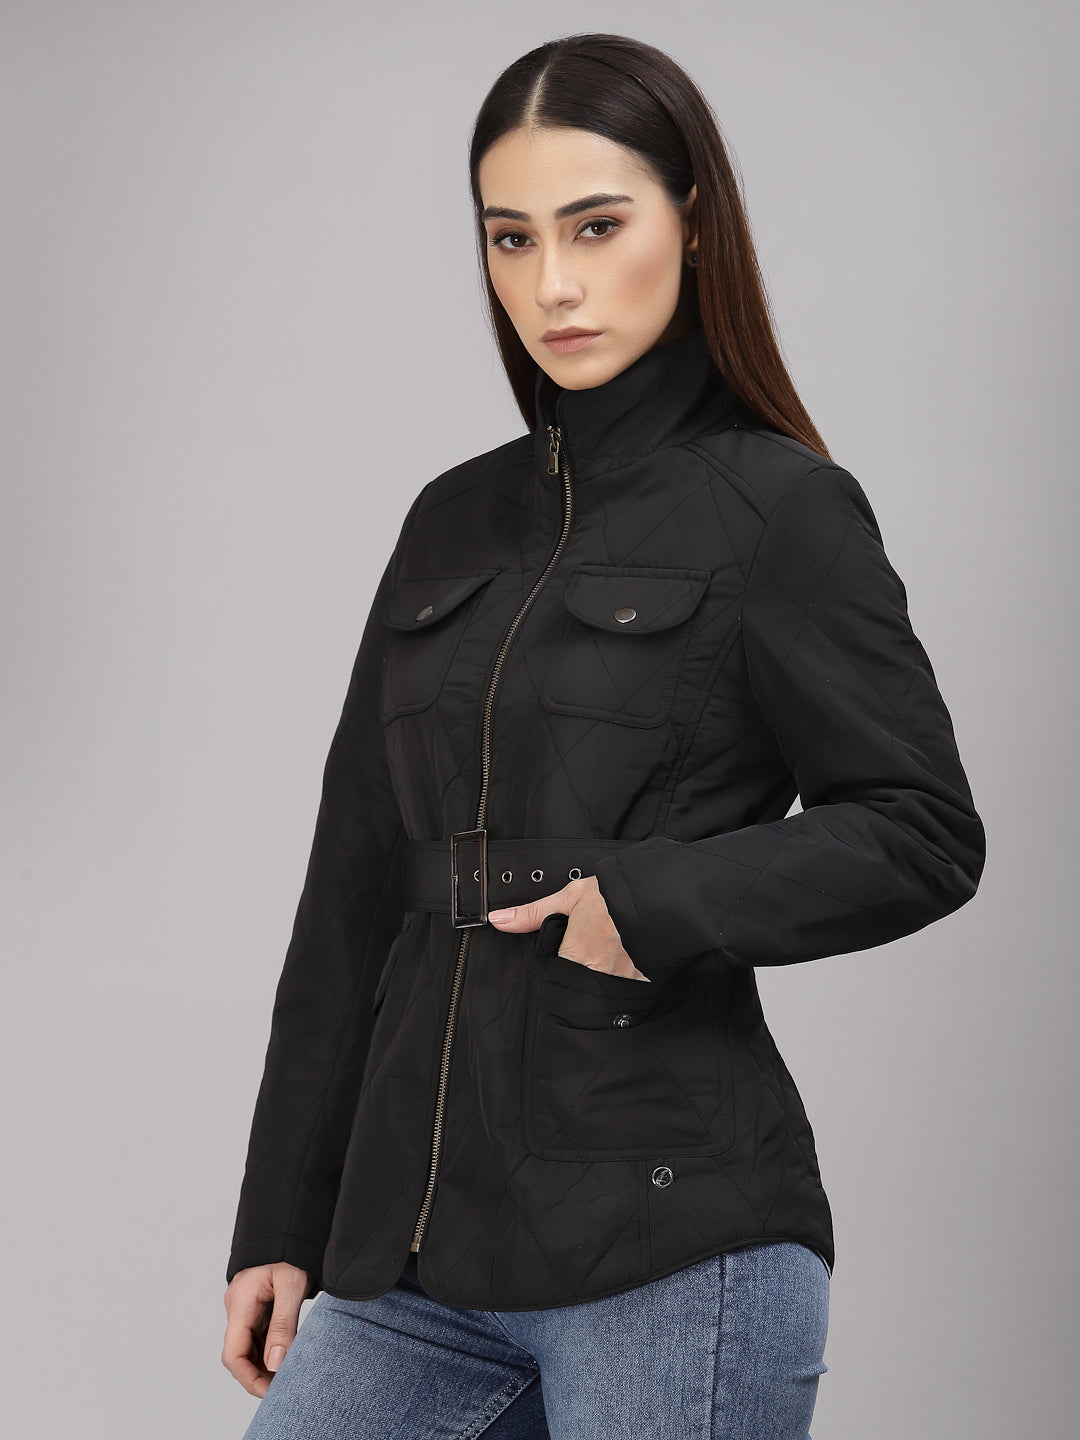 Gipsy Women Mock Collar Regular Full Sleeves Polyester Fabric Black Jackets